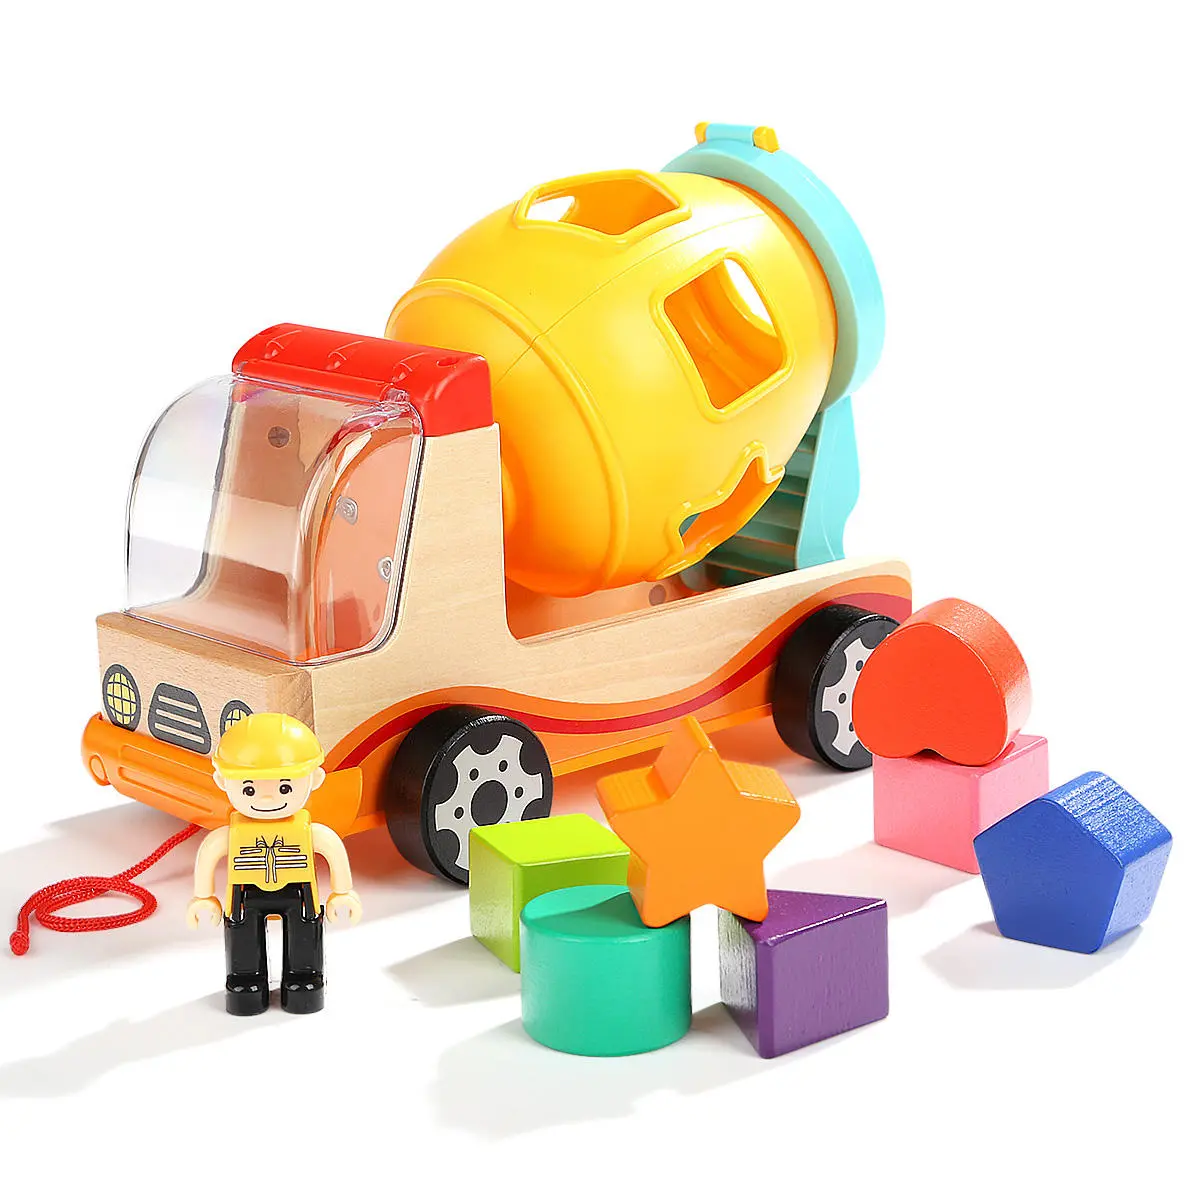 Topbright-120308 blocks truck modeling shape cognitive mixer toys